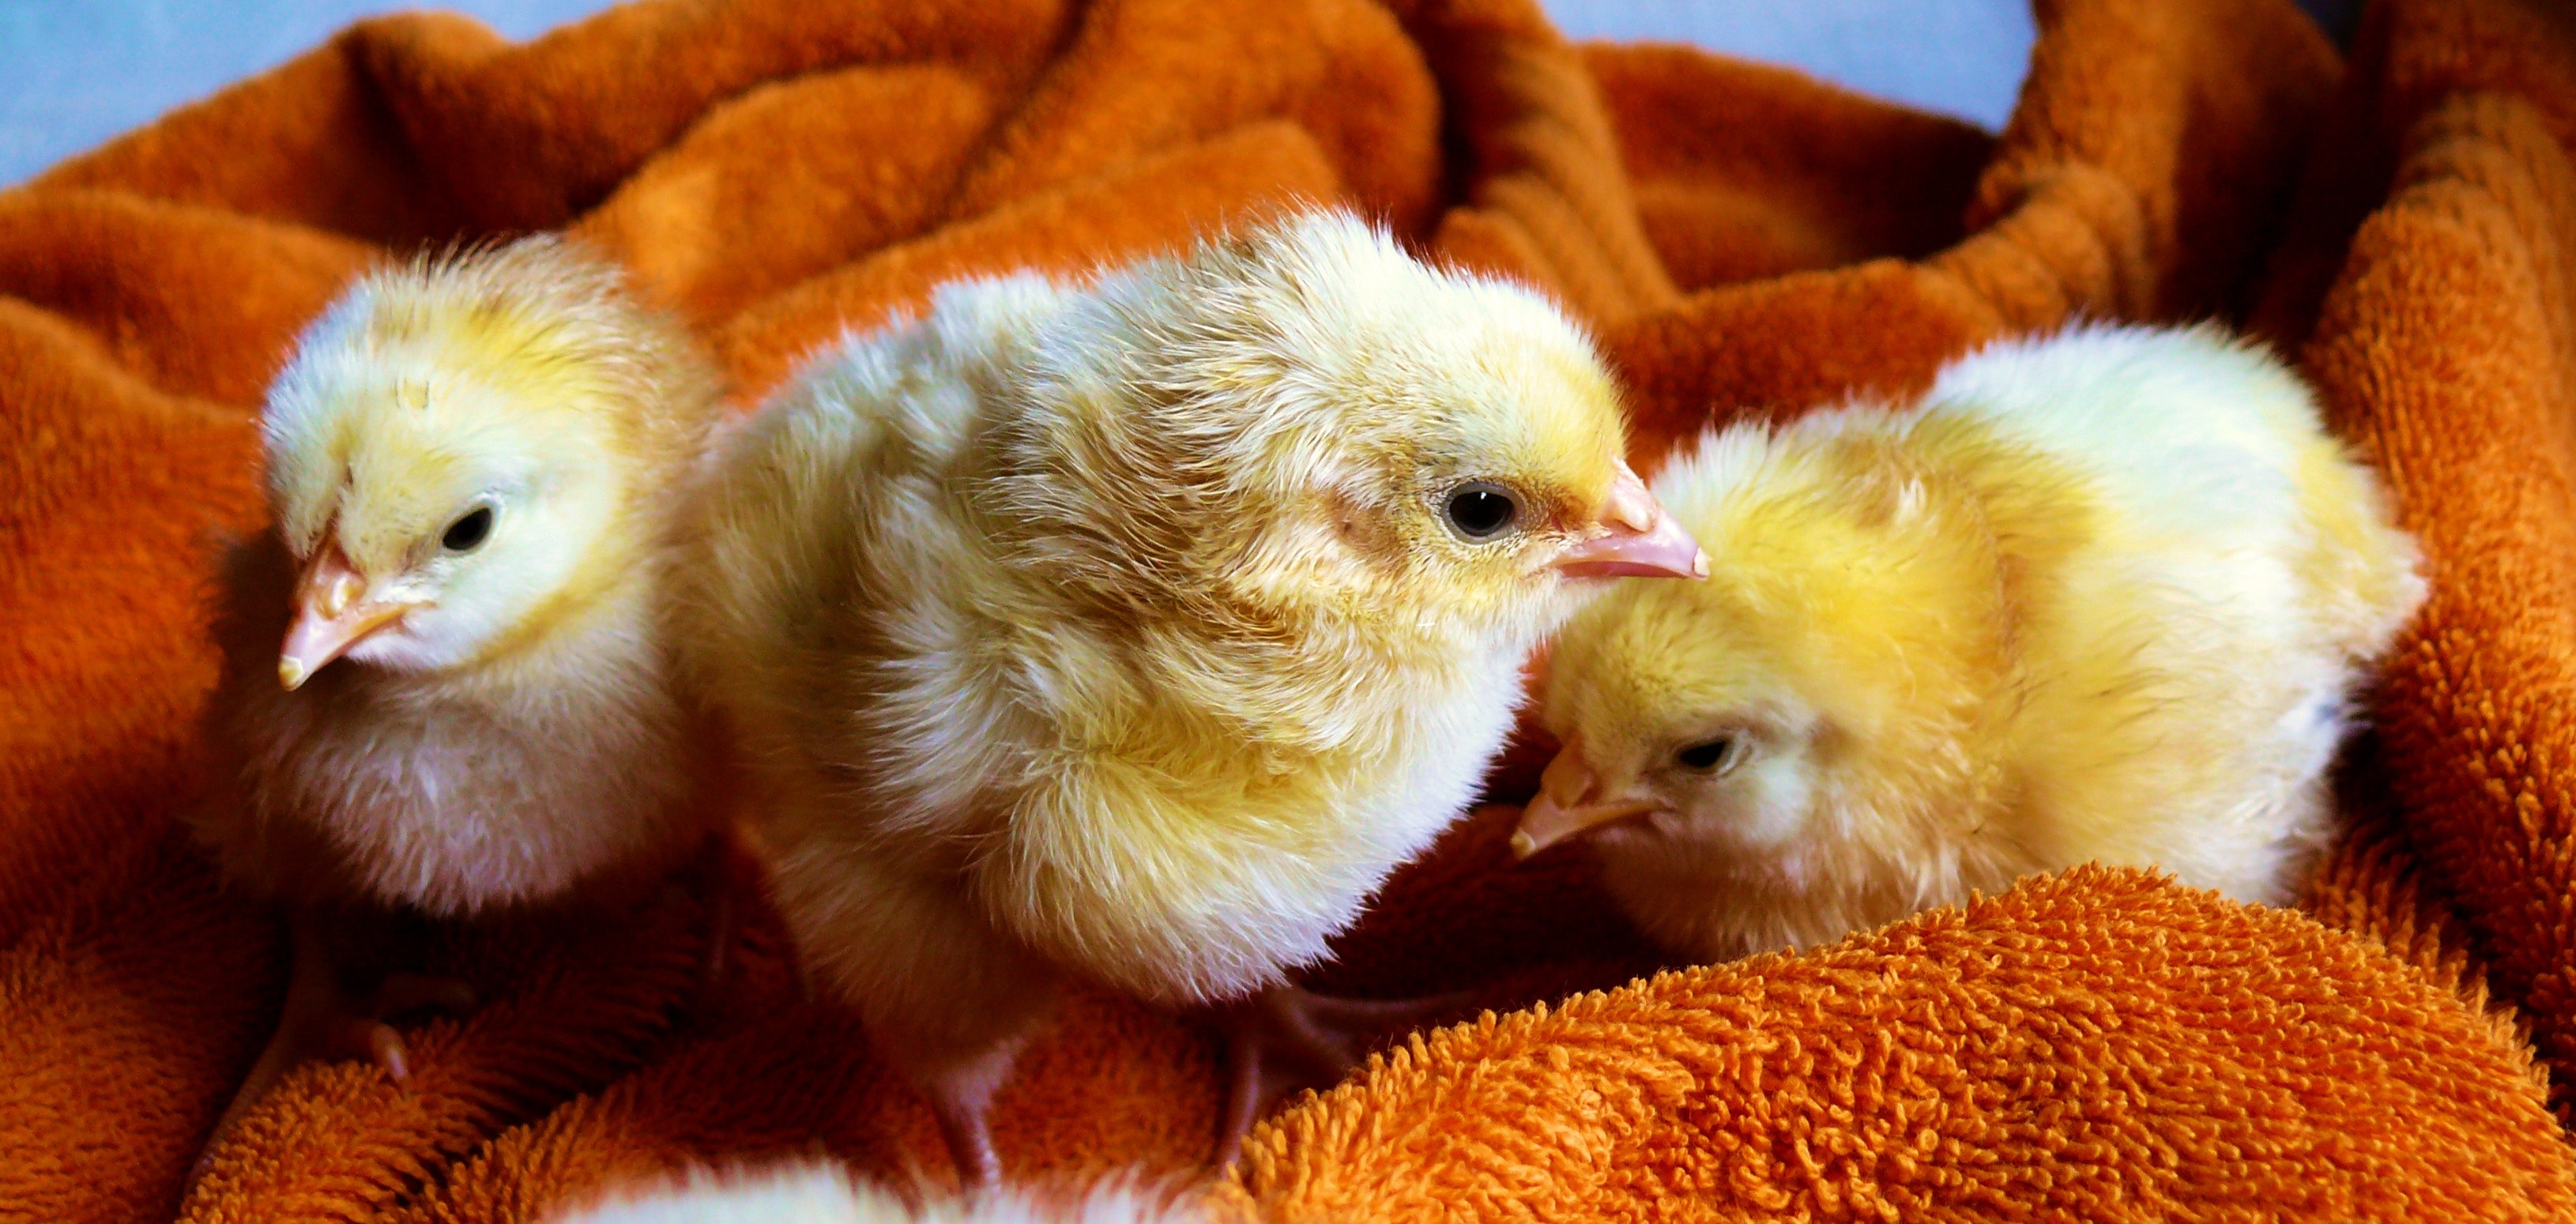 Free stock photo of animals, chicken, chicks